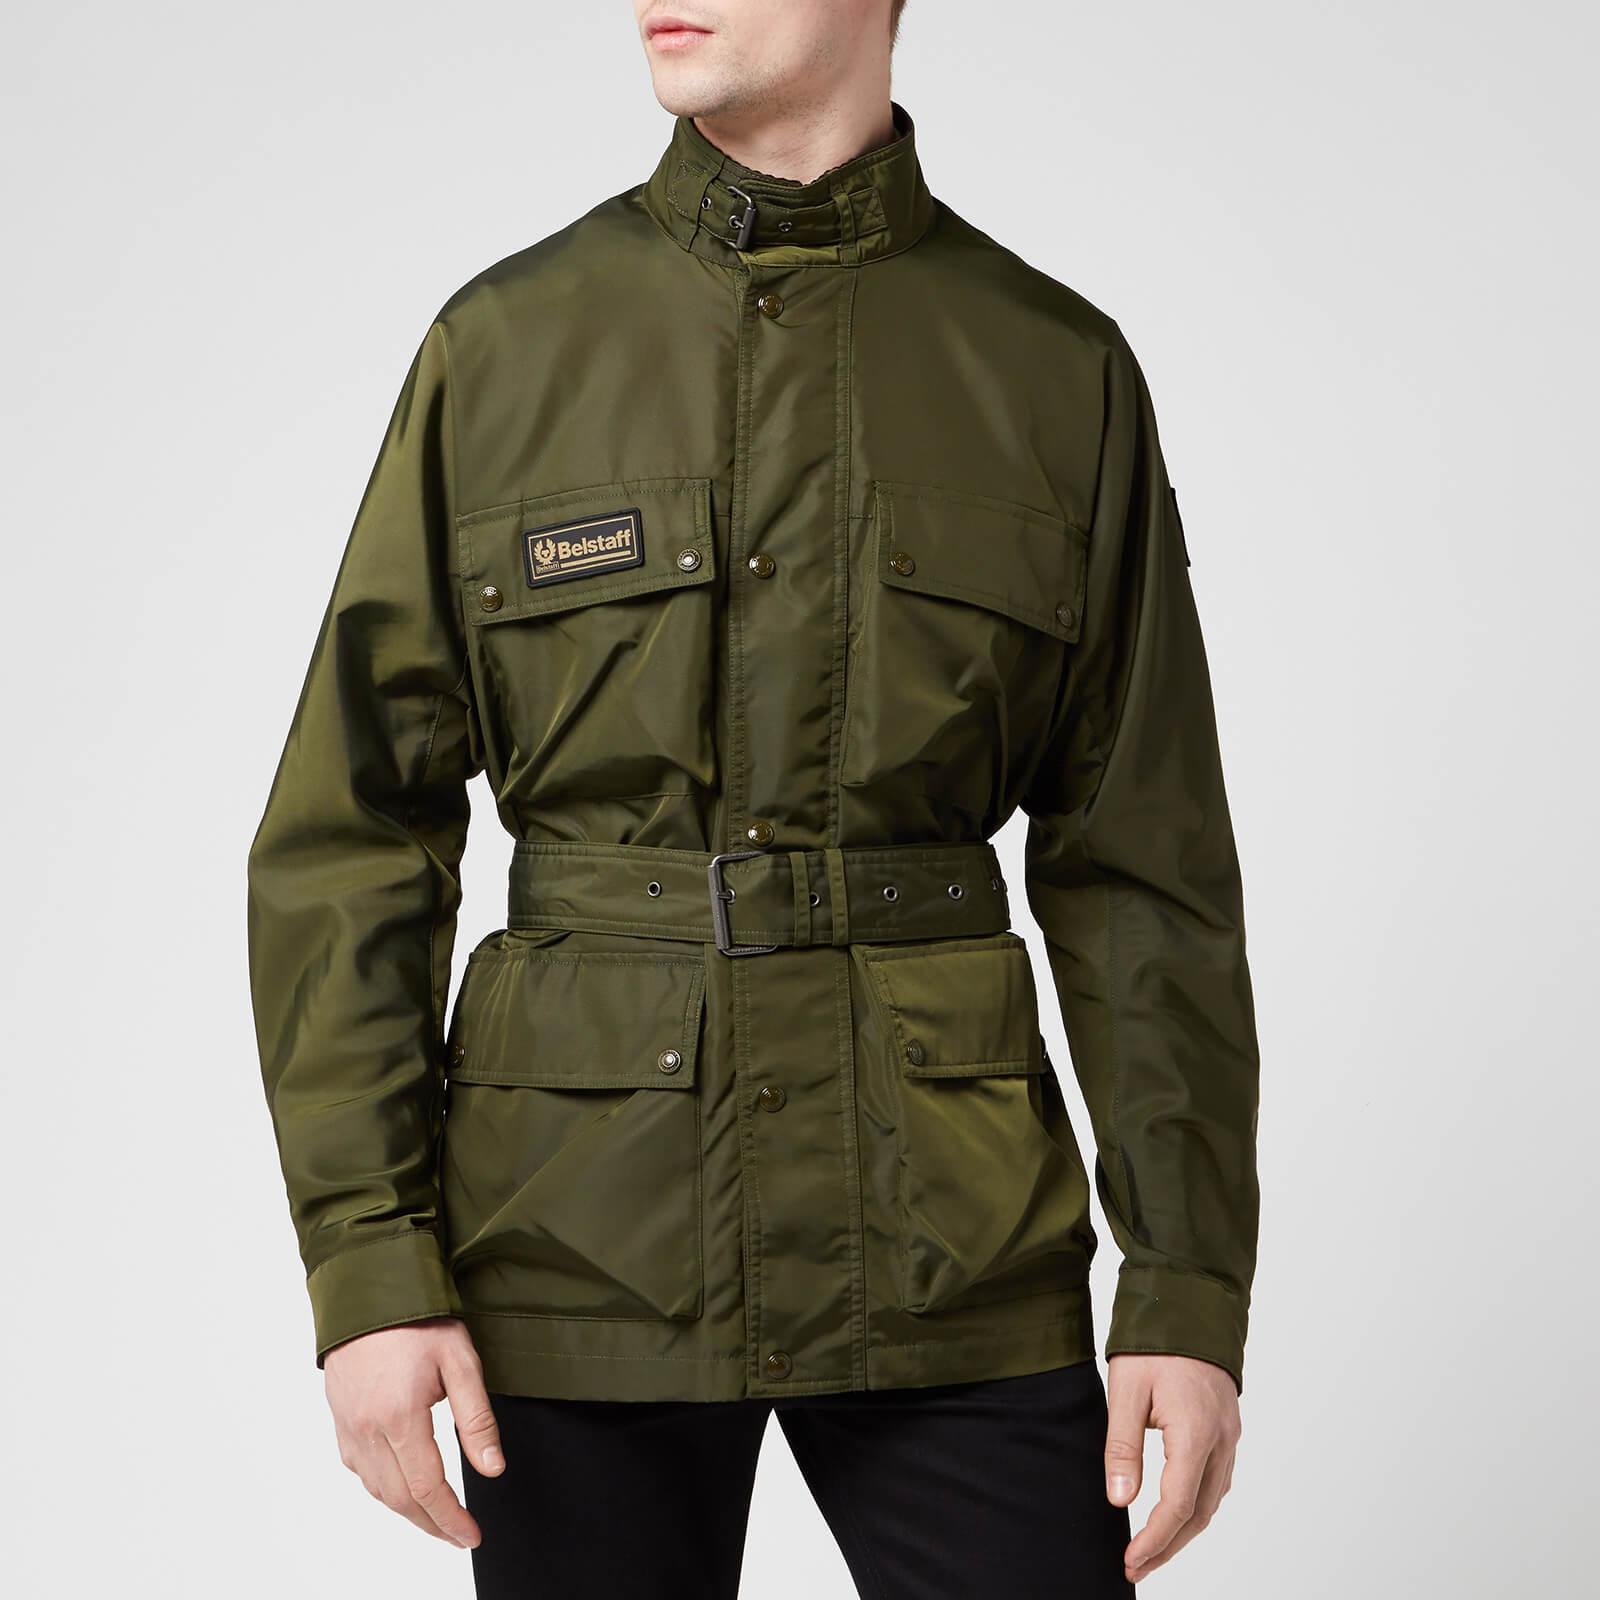 Belstaff Synthetic Trialmaster Xl500 Jacket in Green for Men - Lyst